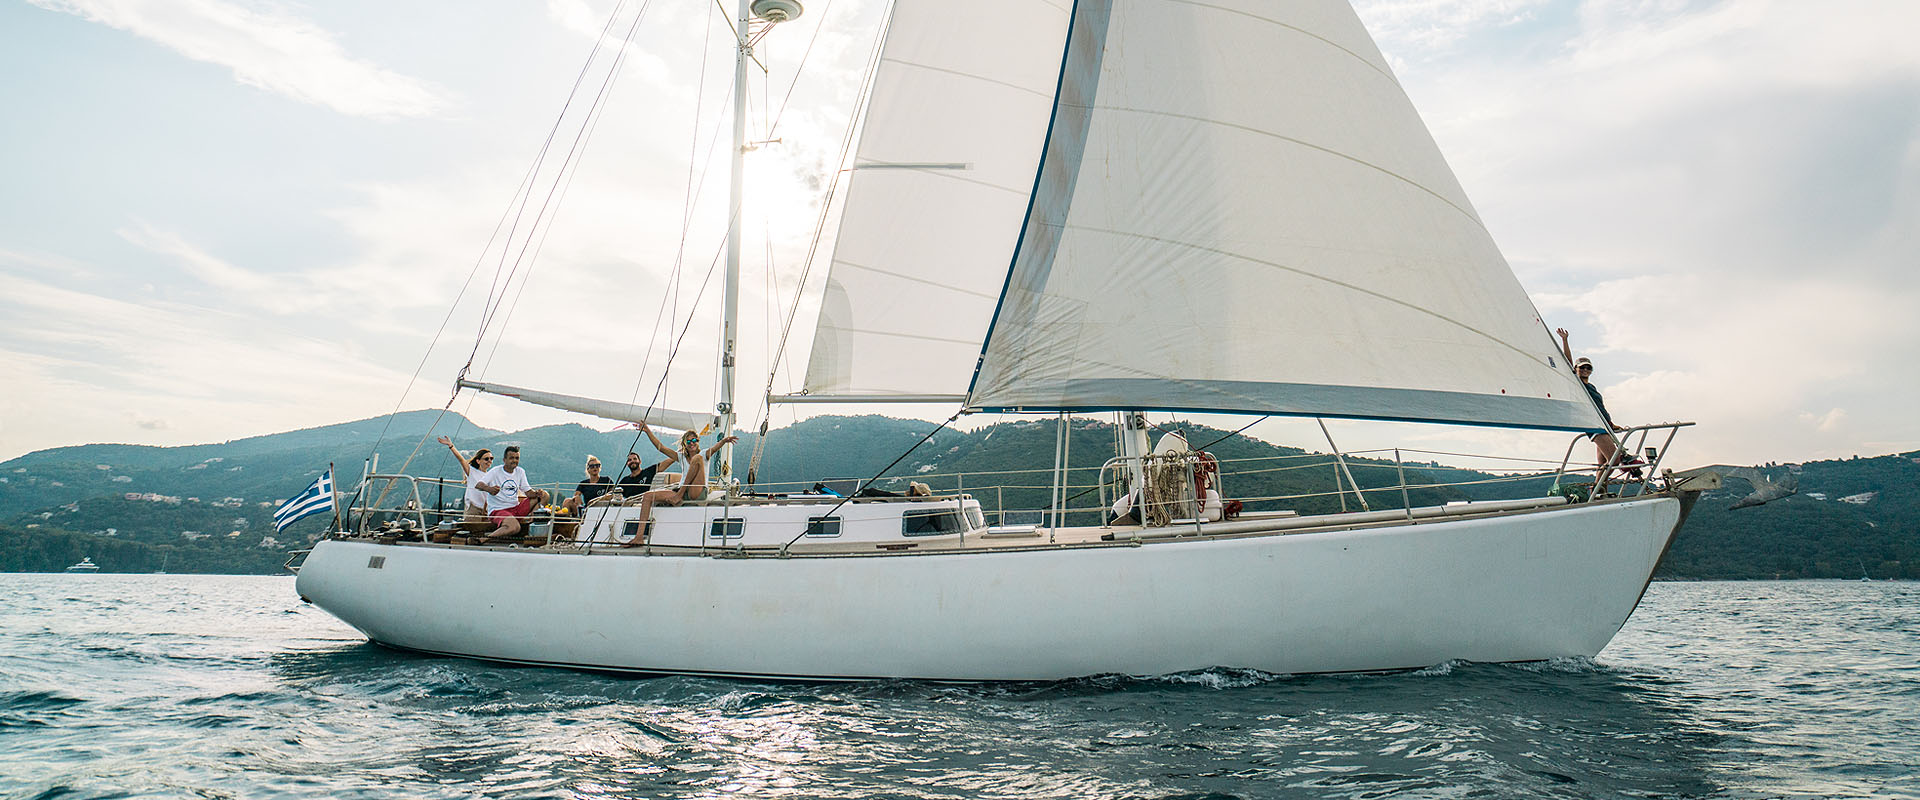 exantas greece - sailing trips